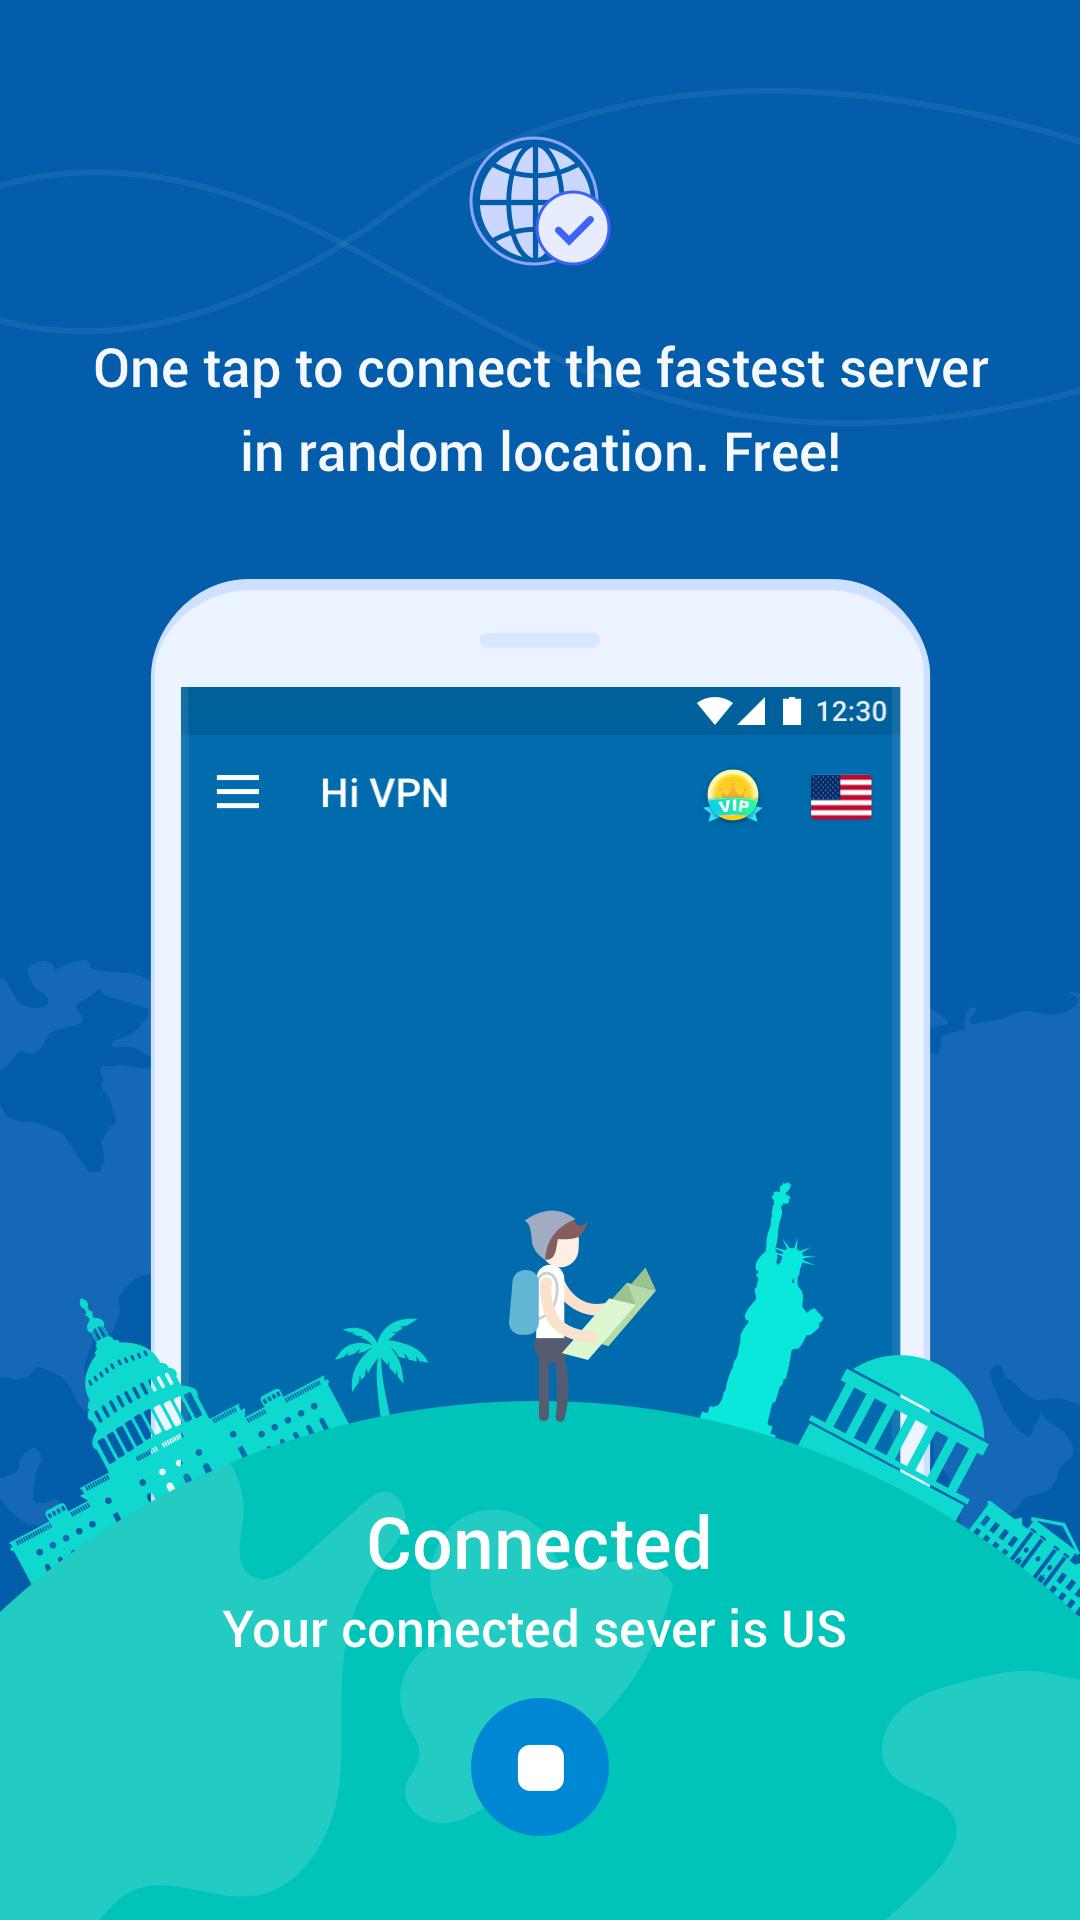 Hi VPN, Free VPN – Fast, Secure and Unlimited VPN for Android - APK